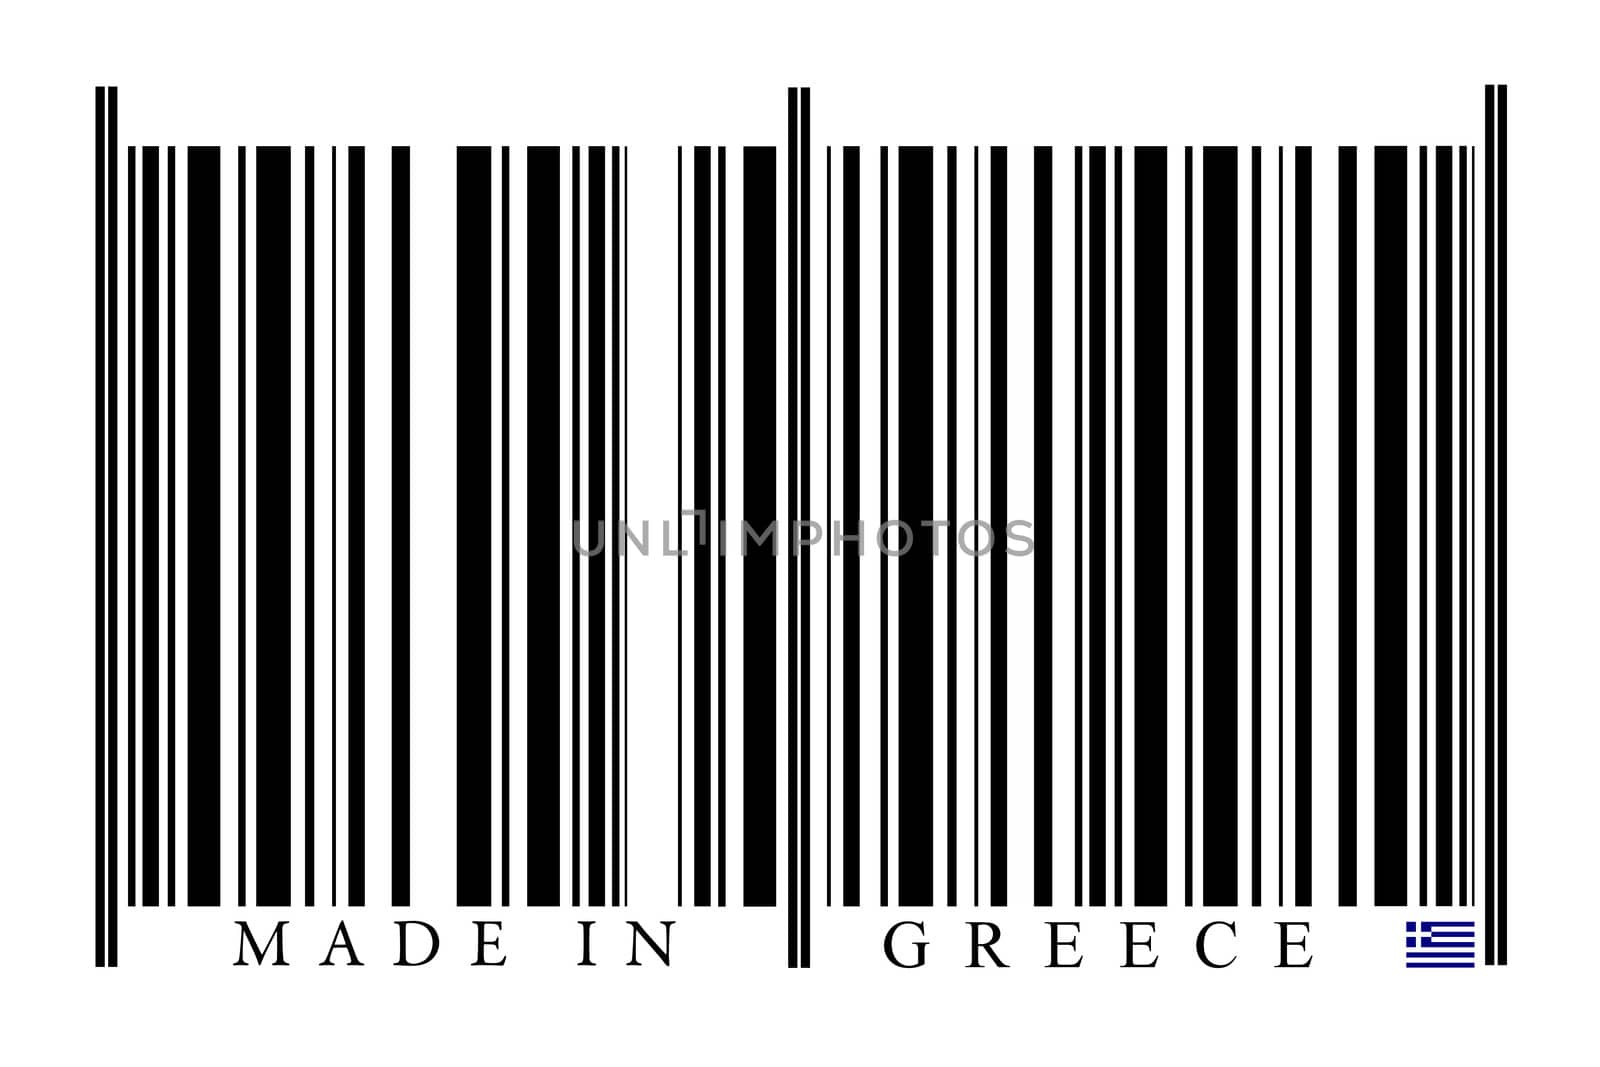 Greece Barcode by gemenacom